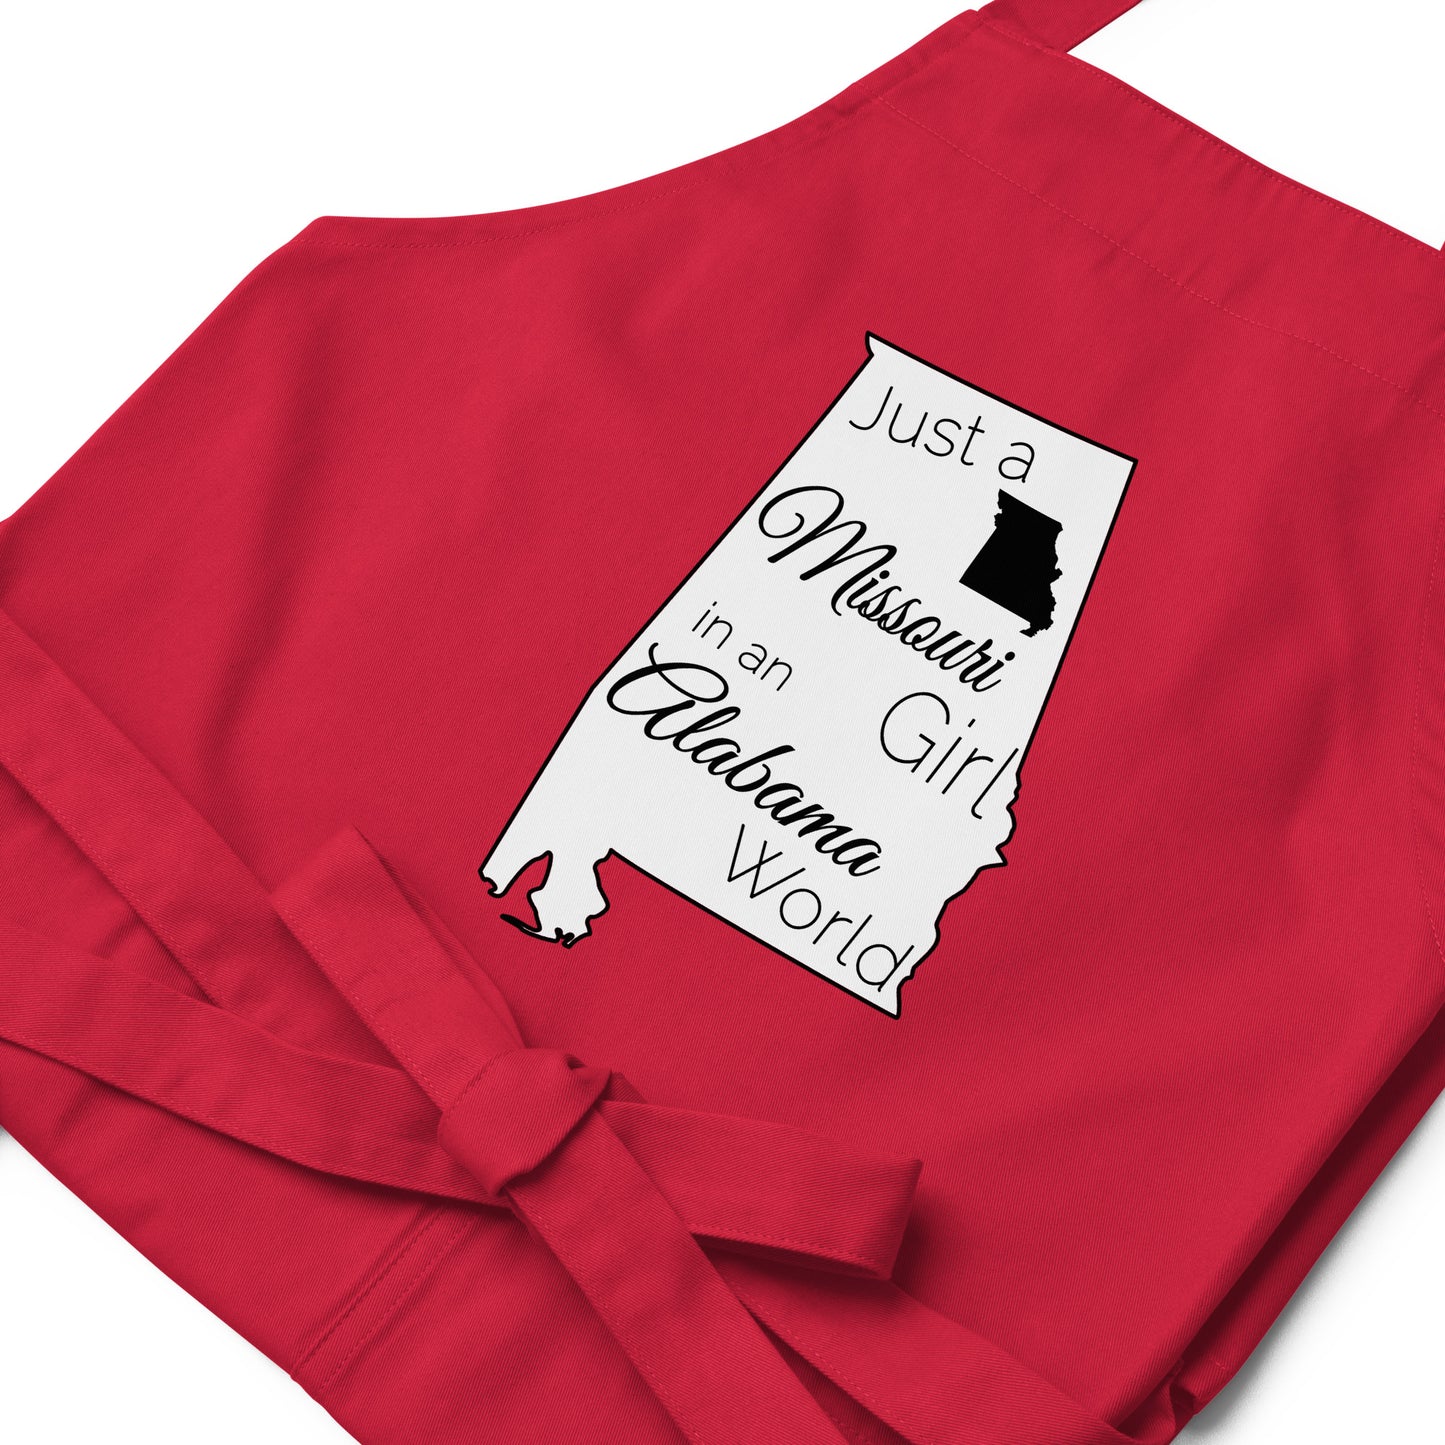 Just a Missouri Girl in an Alabama World Organic cotton apron